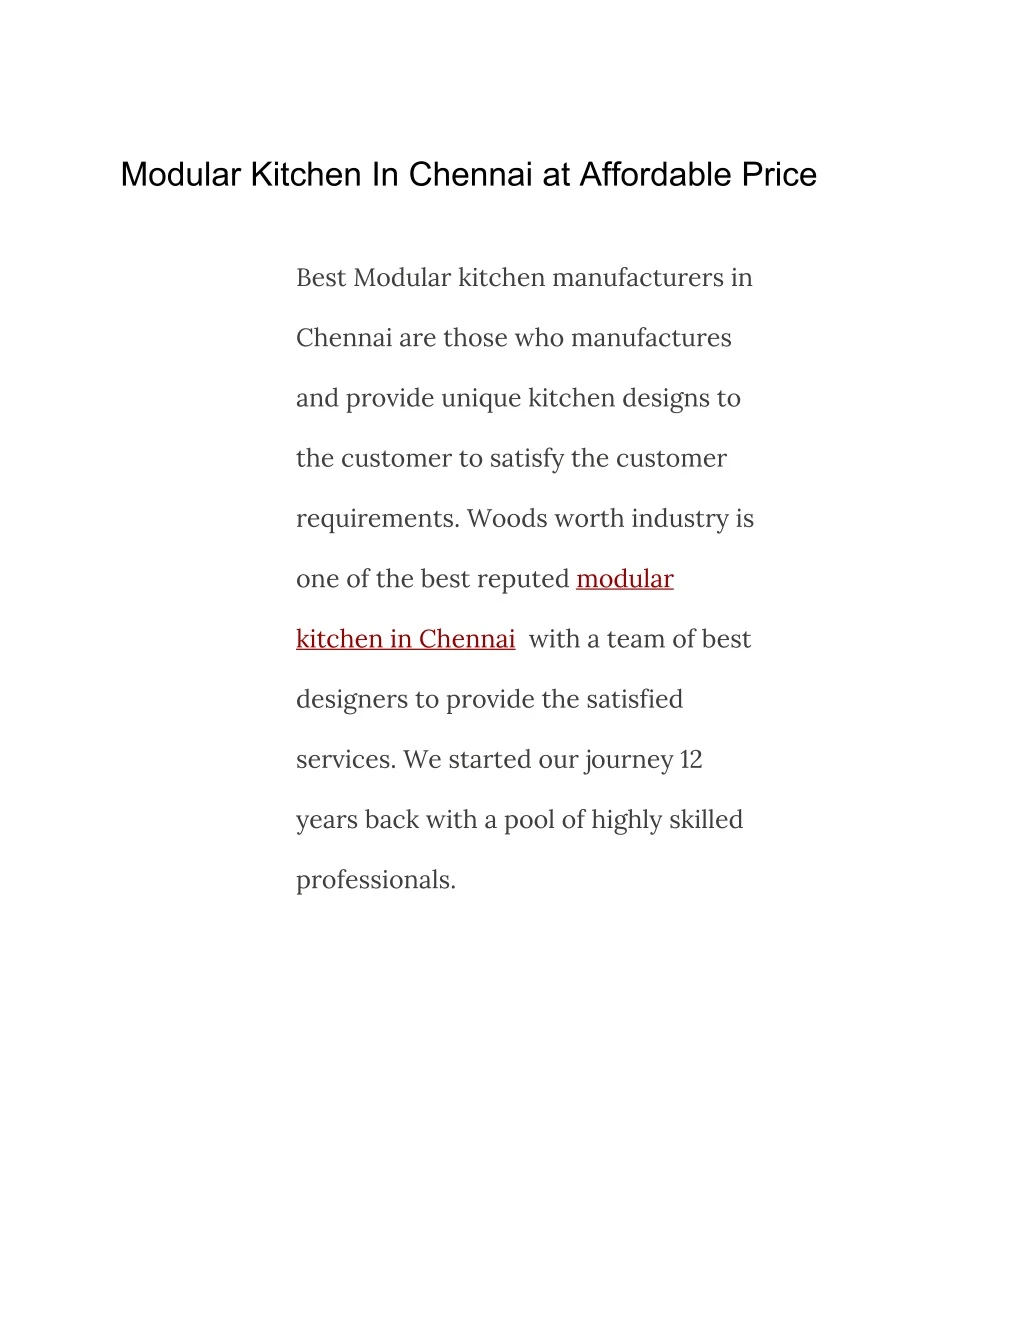 modular kitchen in chennai at affordable price